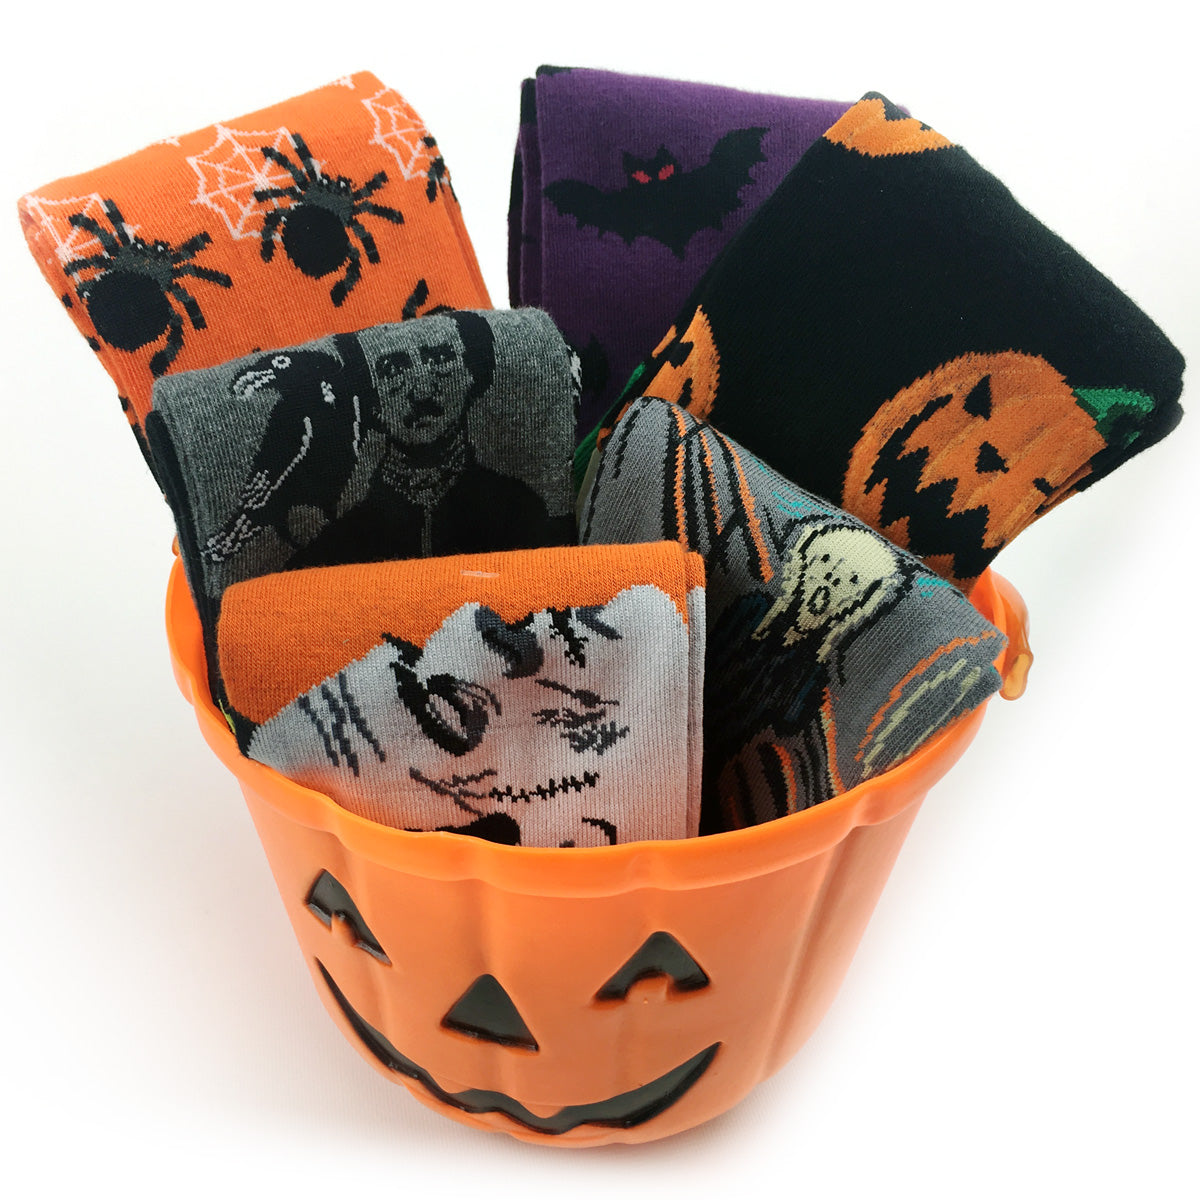 Halloween socks at ModSock including Frankenstein, Poe, Edvard Munch's The Scream, bats, spiders and jack O' lanterns.